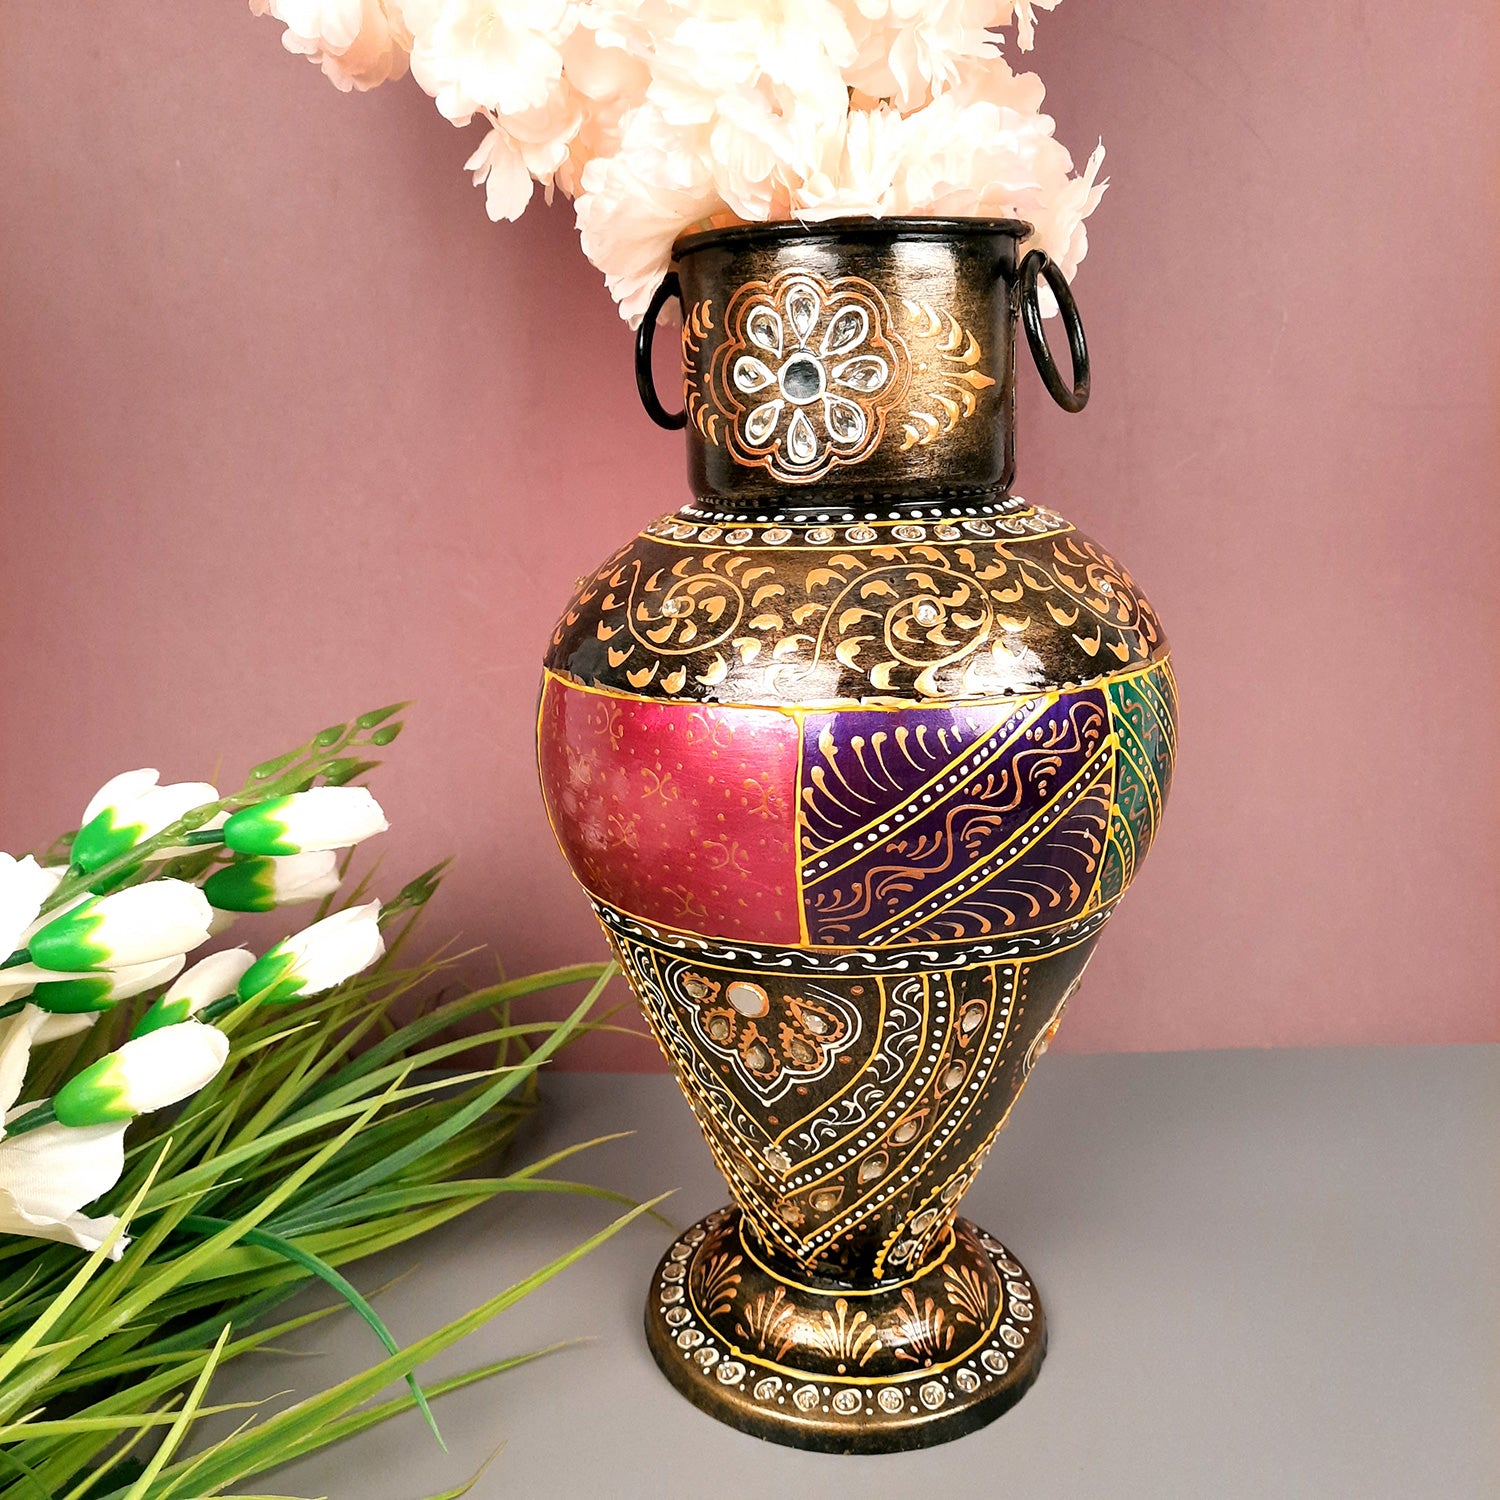 Flower Vase | Pots for Flowers - Metal - For Tabletop, Living Room, Home & Office Decoration | Centerpiece for Table Decoration |Vases for Gifts- 12 Inch